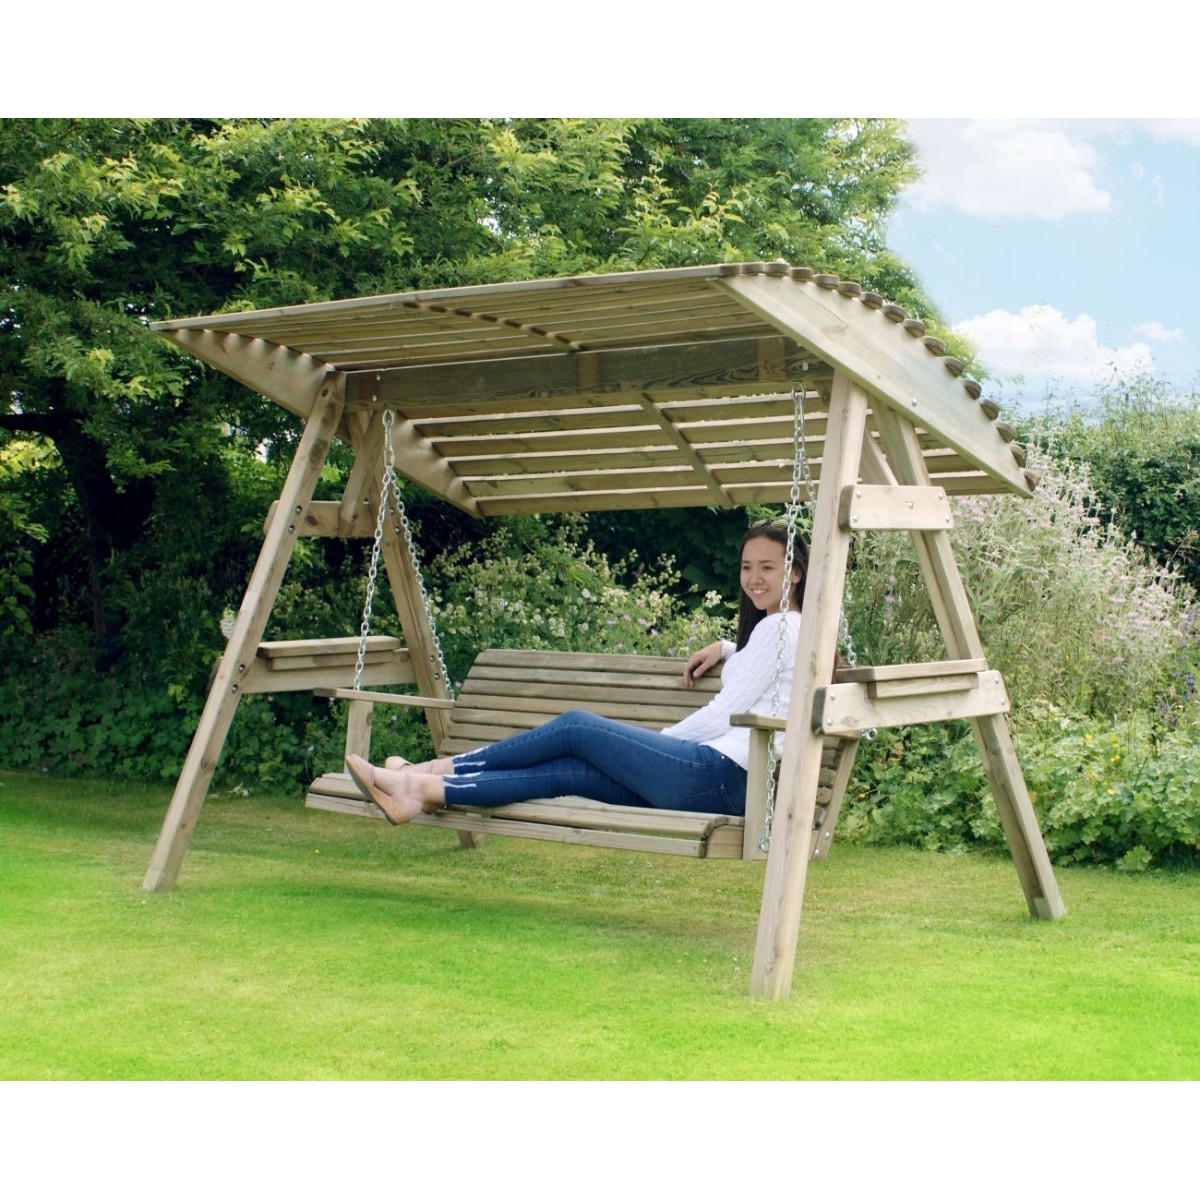 3 Seat Wooden Garden Swing Chair, Wooden Garden Swings With Canopy